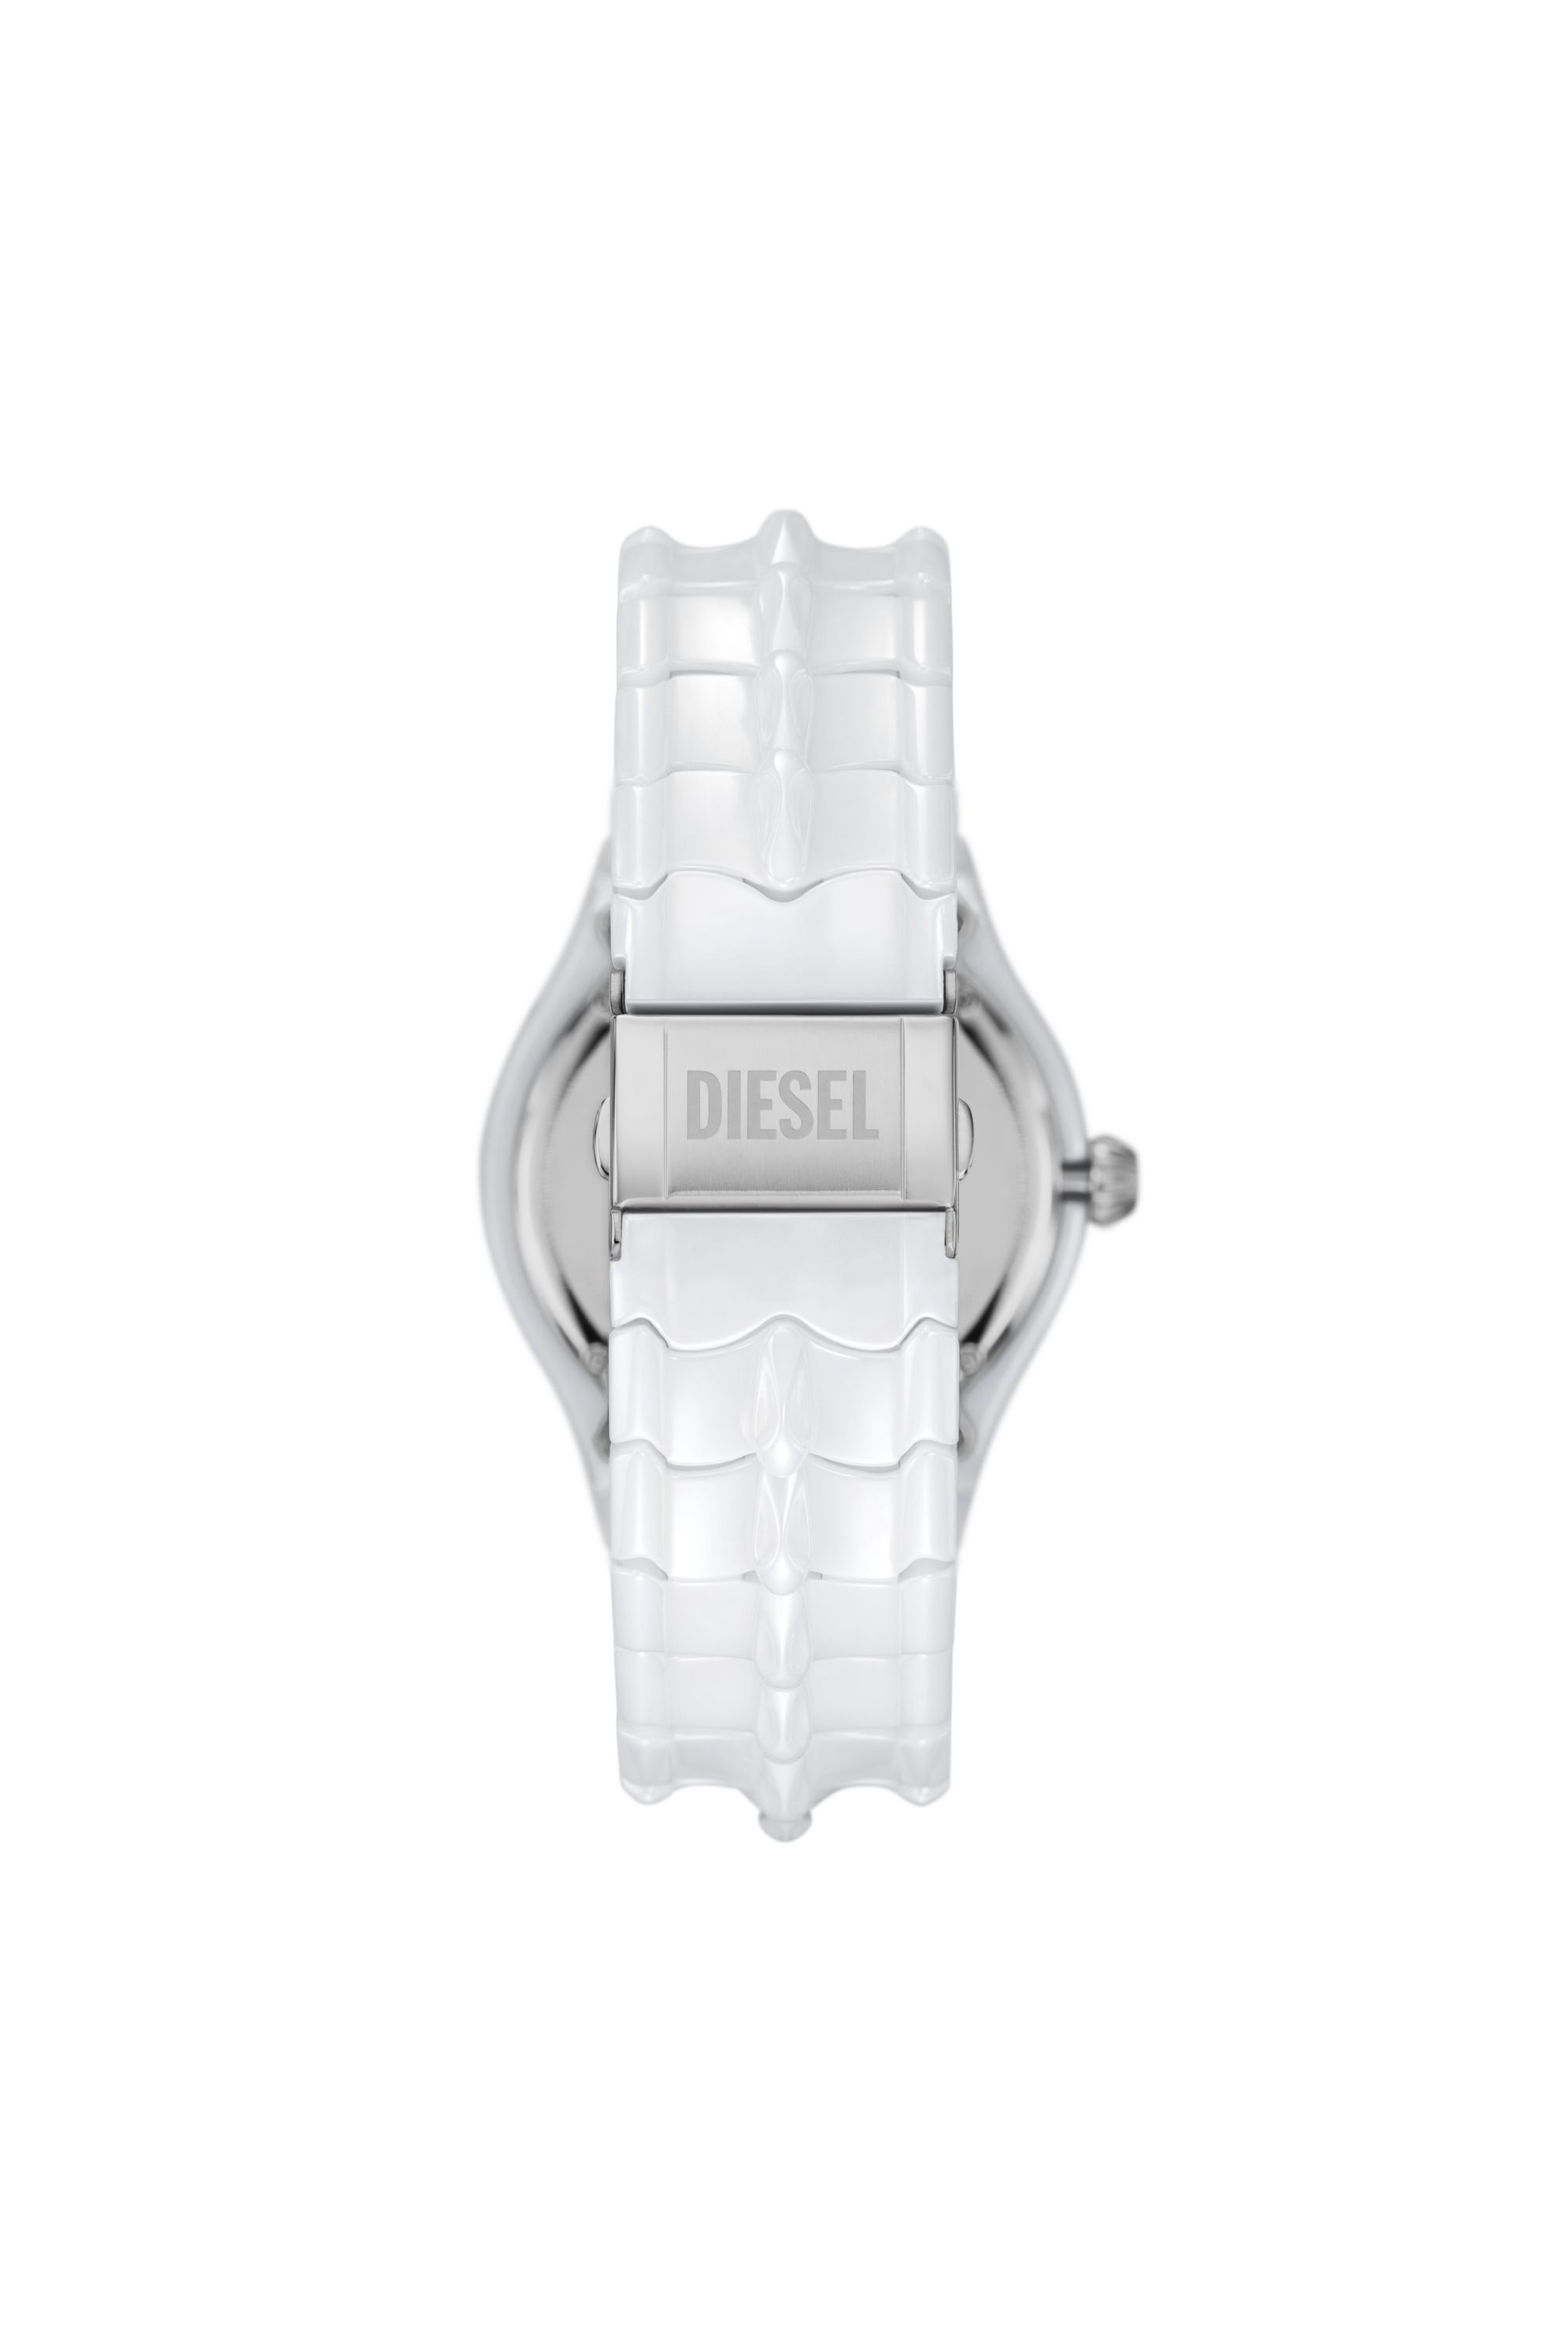 Diesel - DZ2197, Homme Montre Vert en céramique blanche in Blanc - Image 3